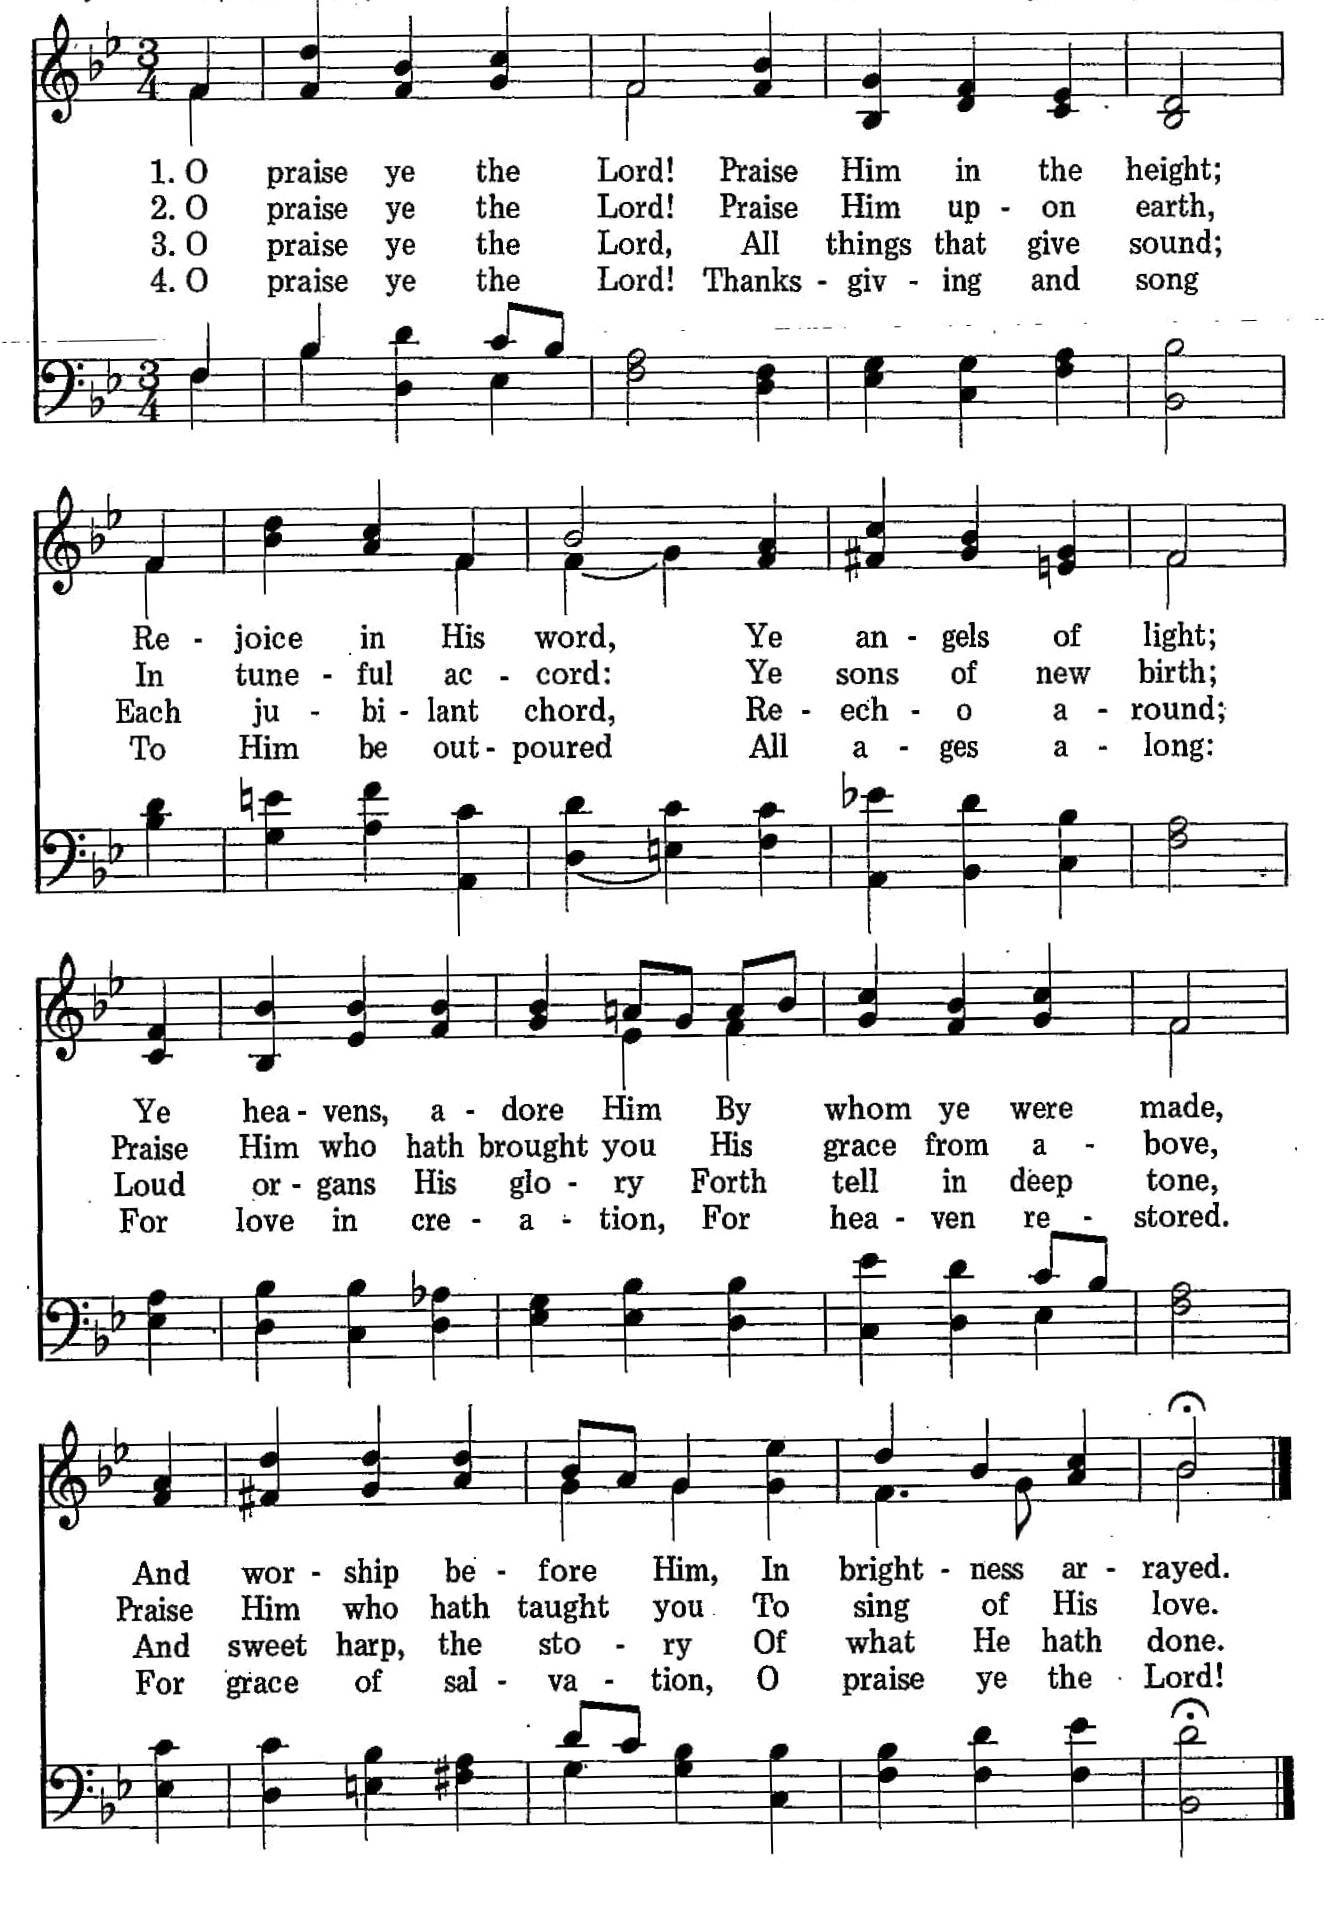 020 – O Praise Ye the Lord sheet music